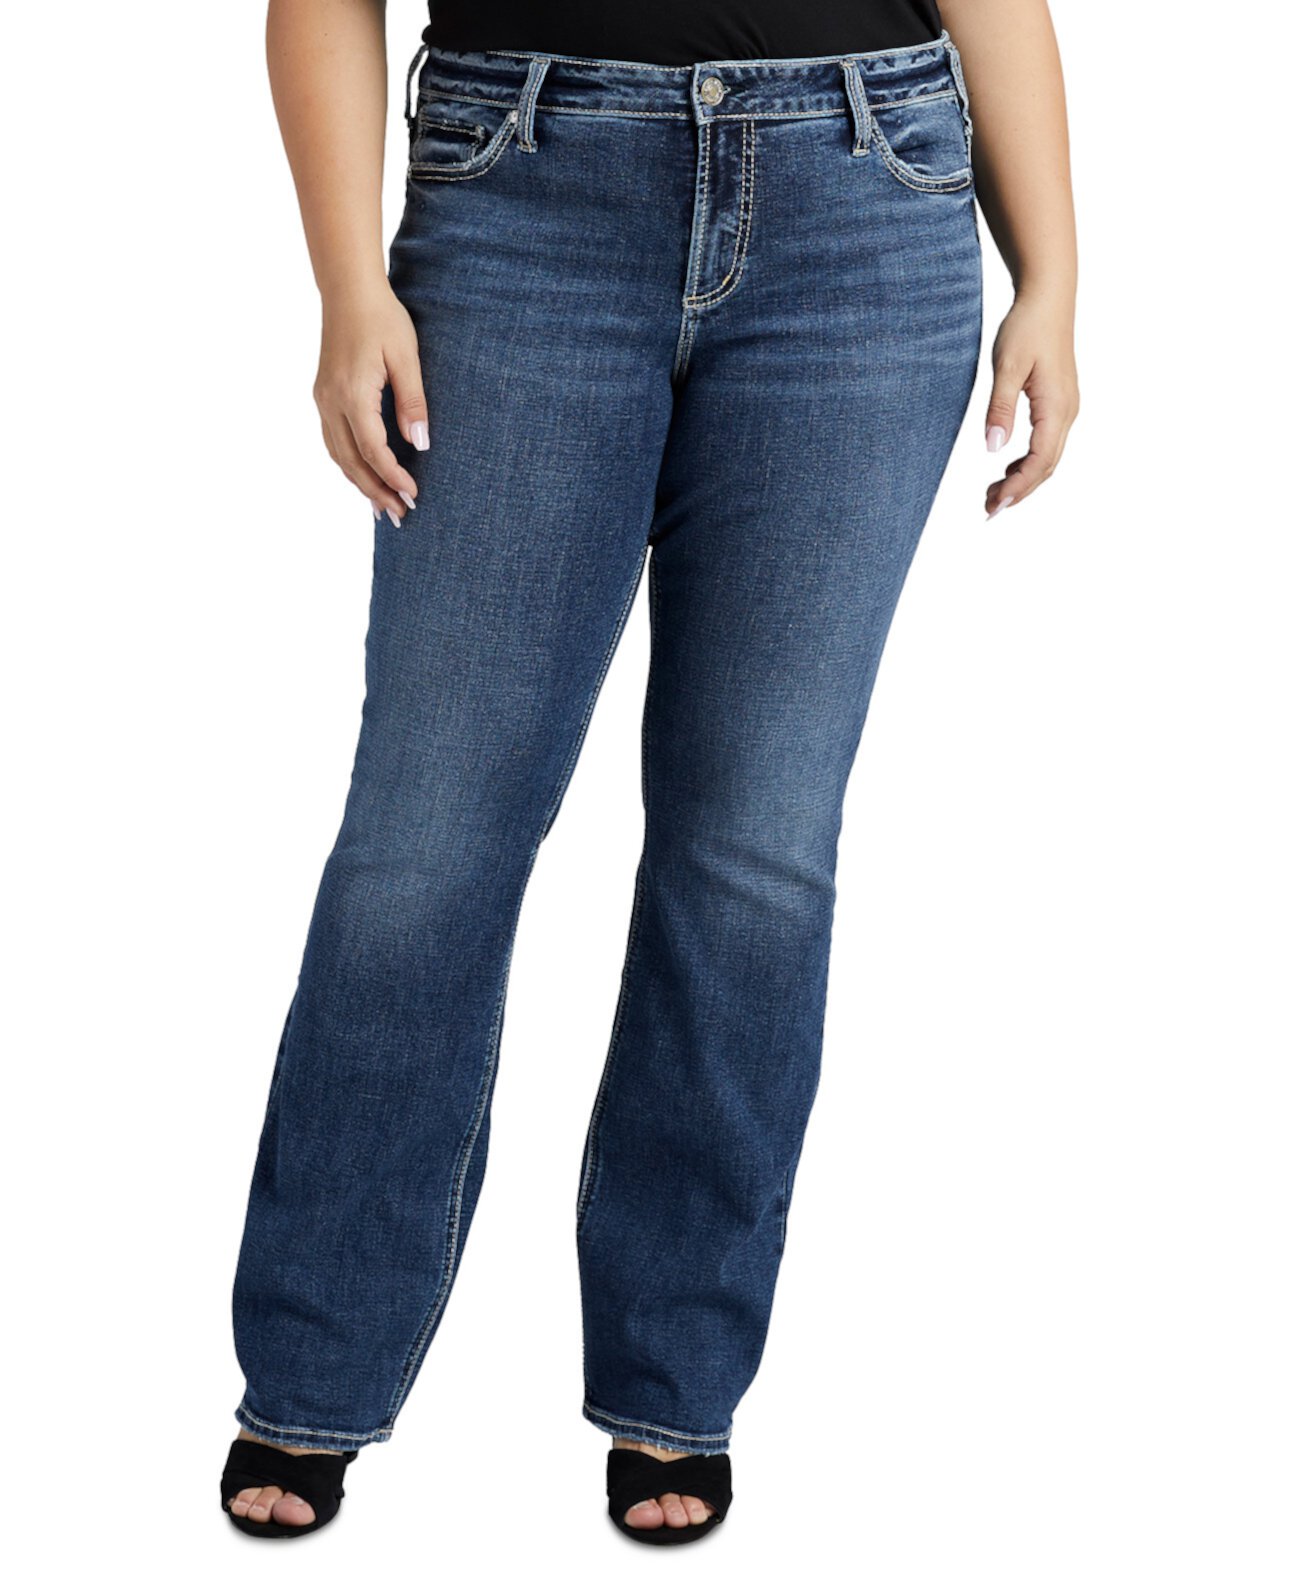 Джинсы Elyse Bootcut больших размеров Silver Jeans Co.